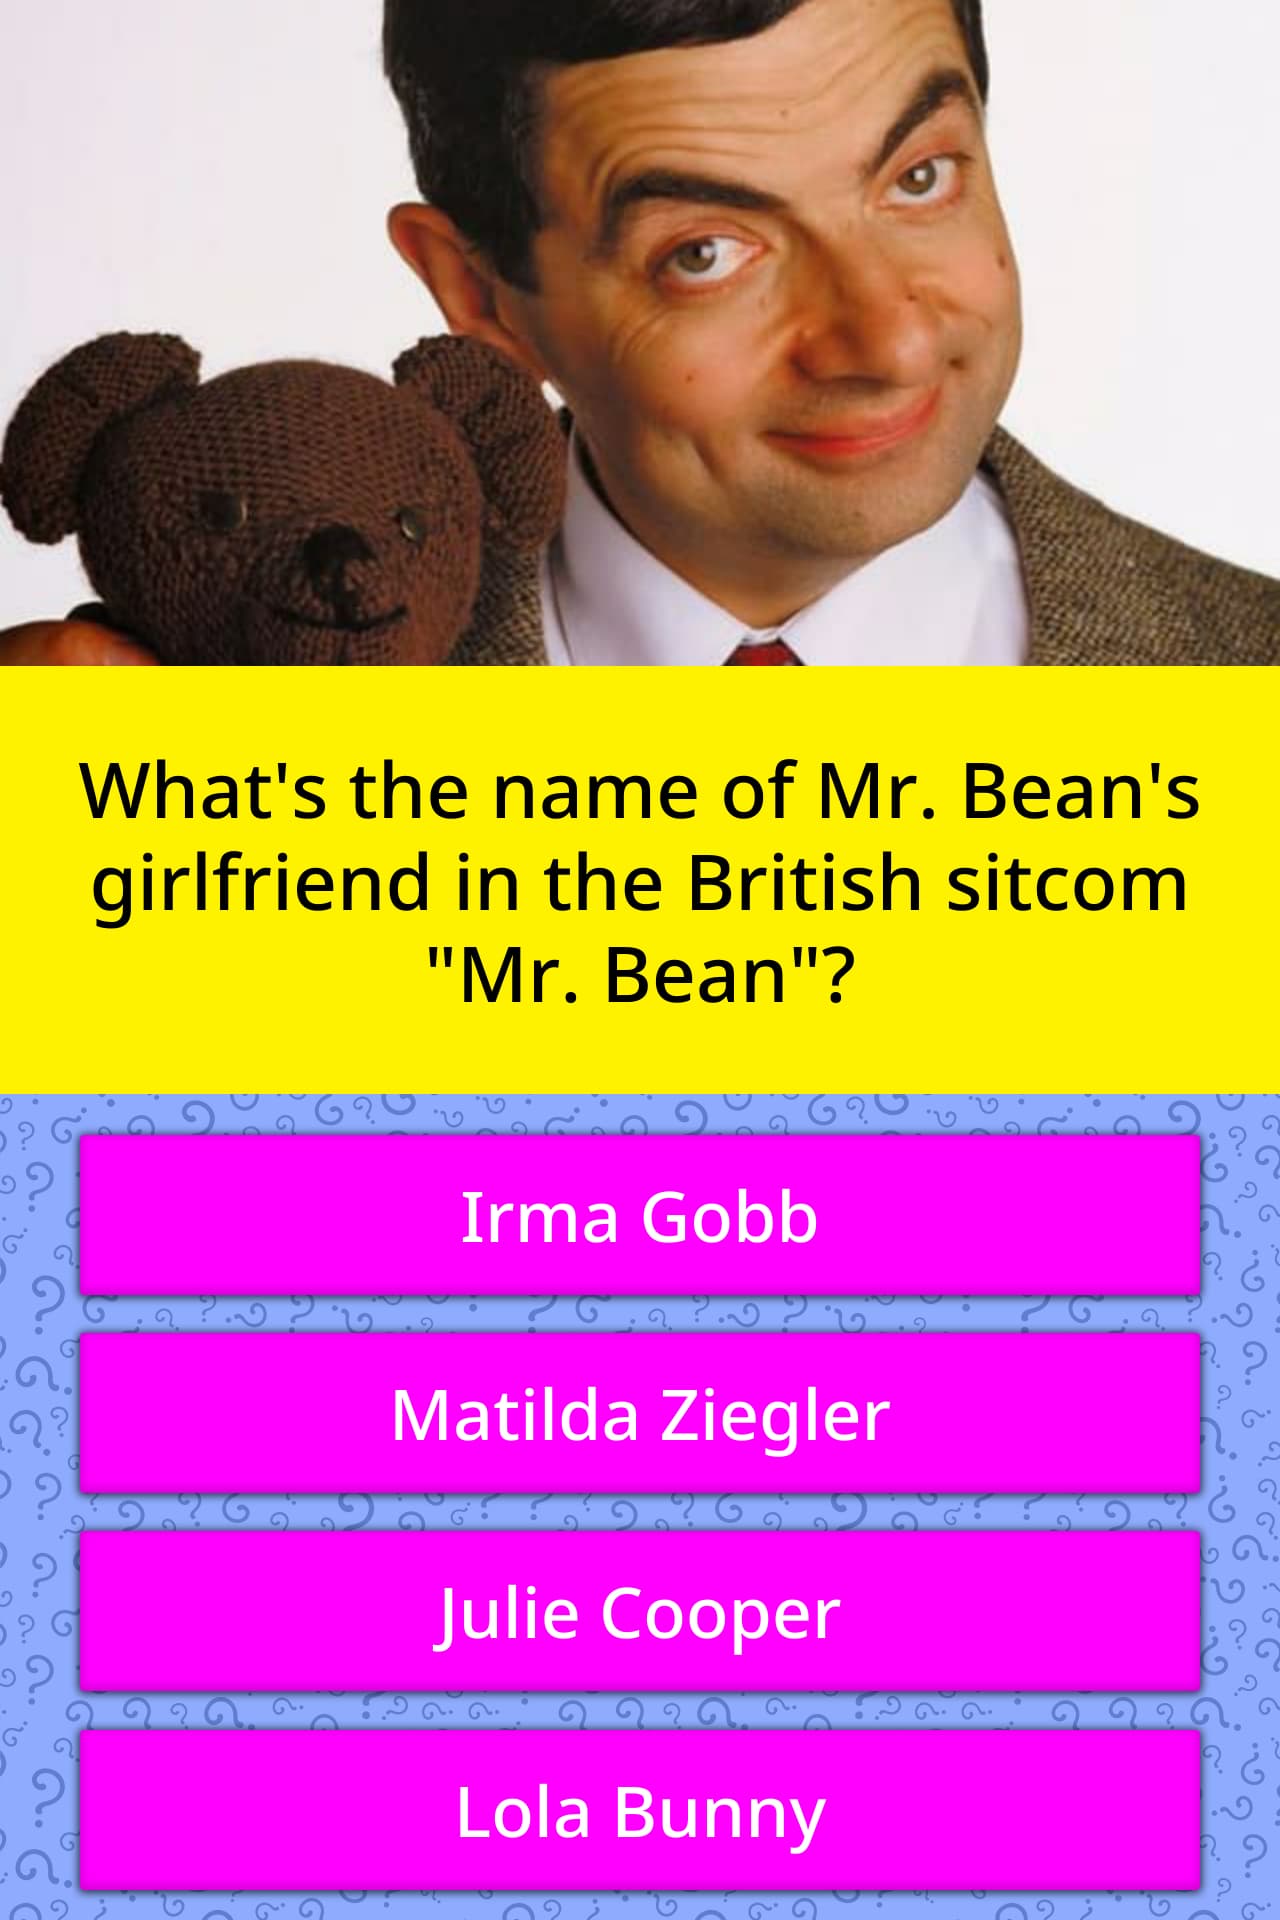 mr bean girlfriend